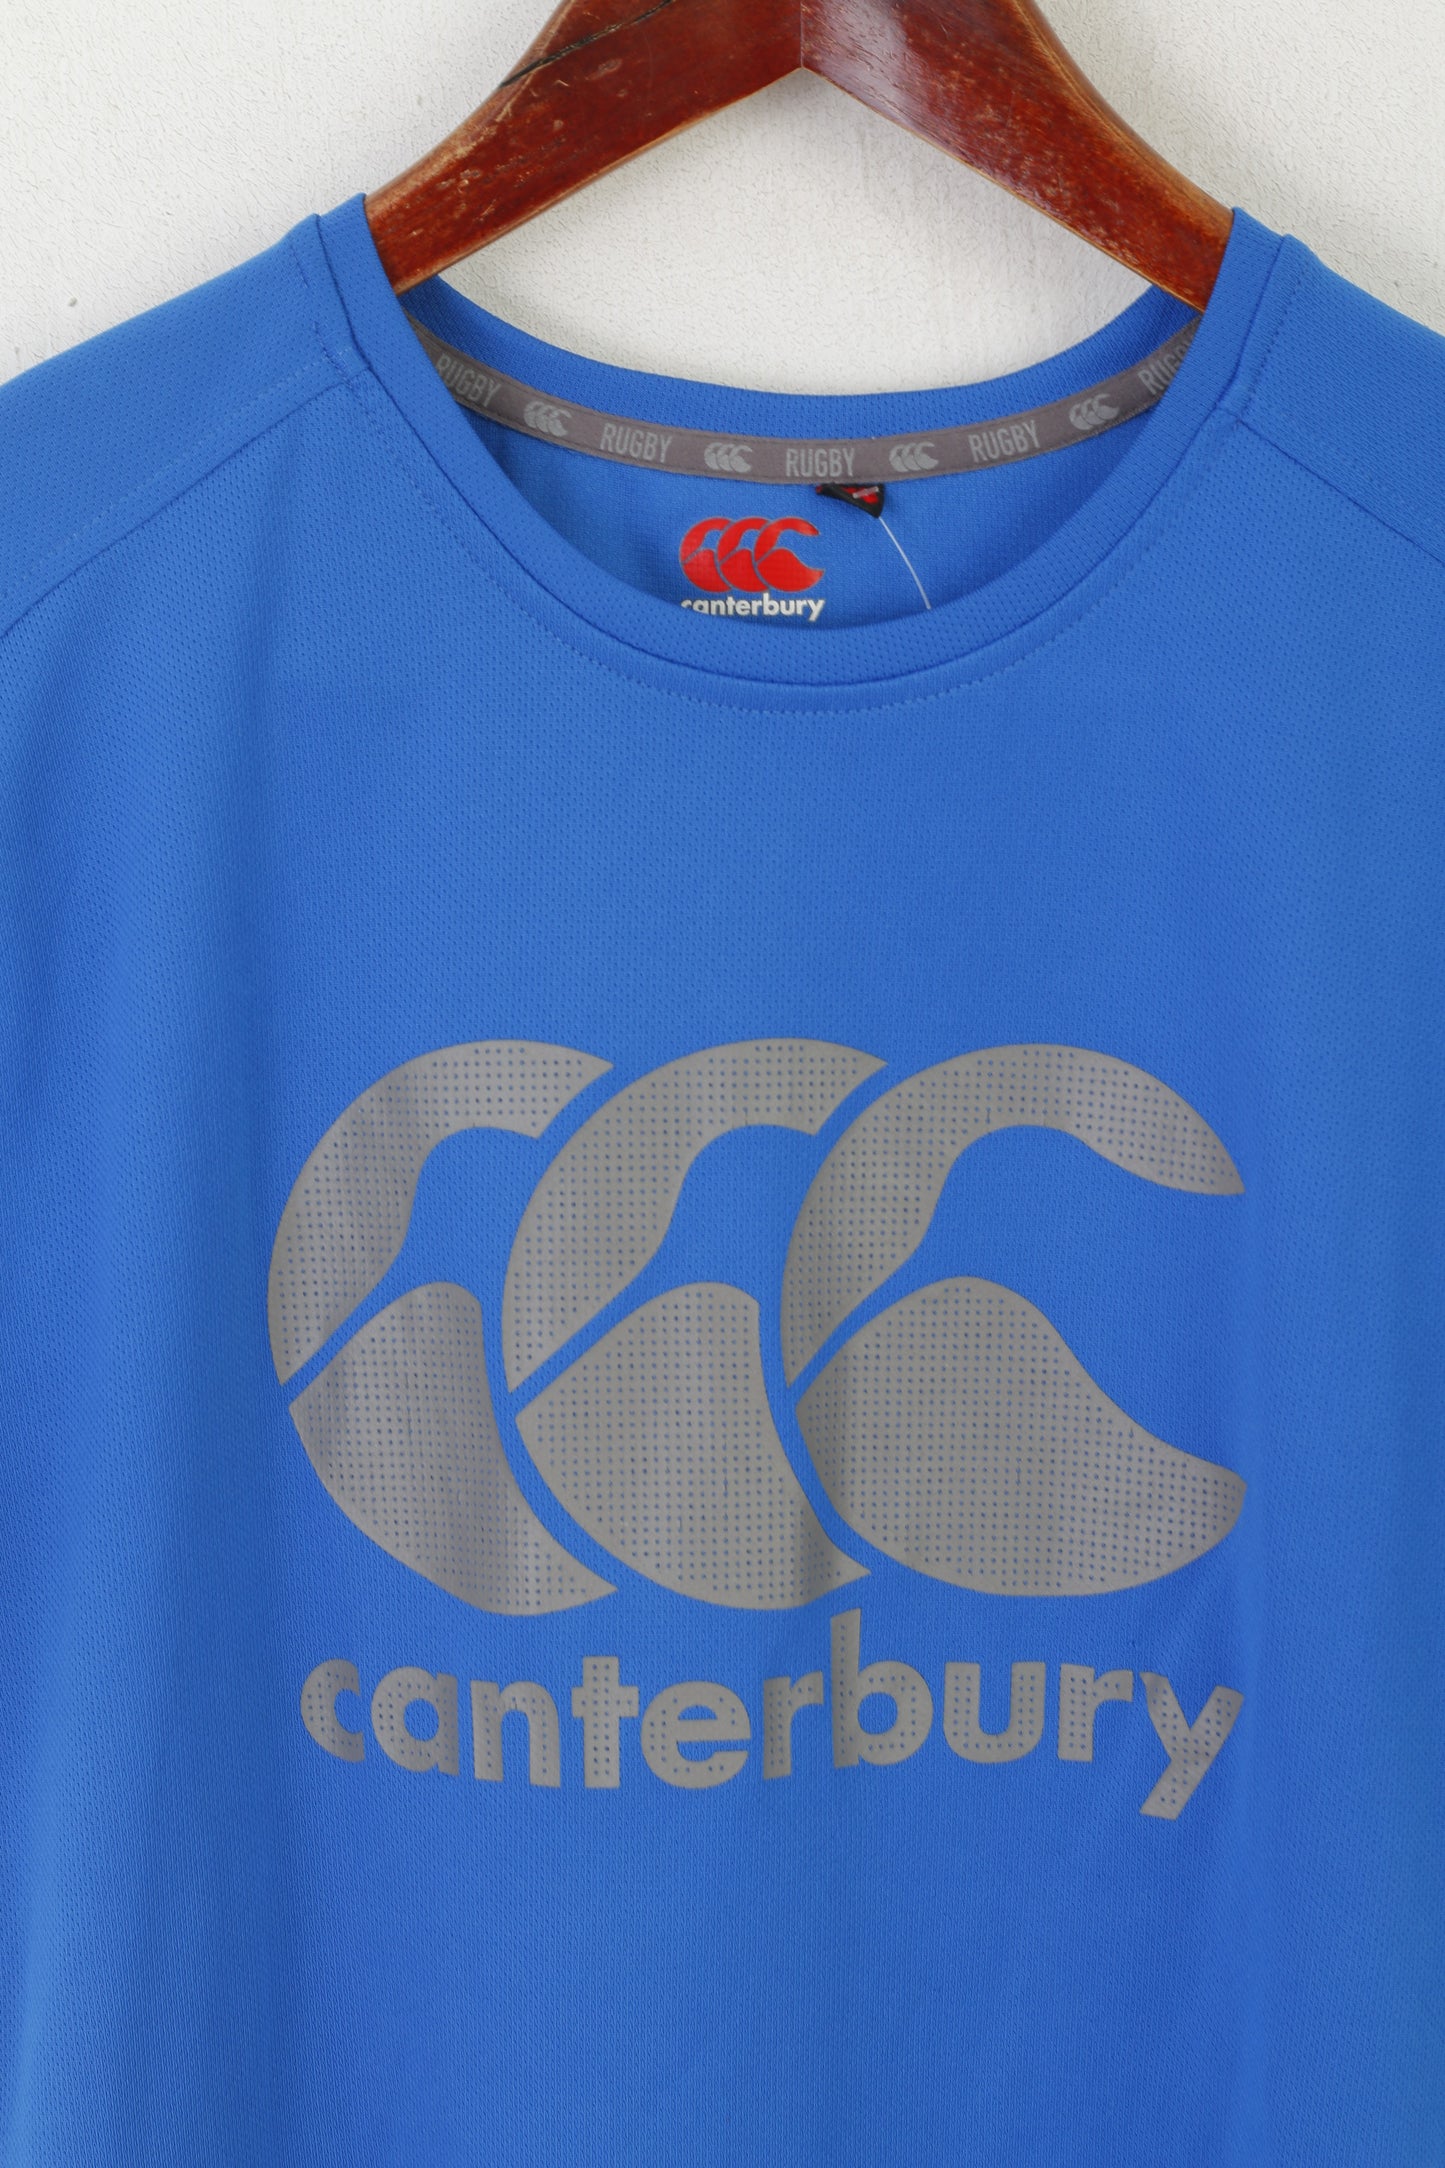 Canterbury Women S Shirt Blue Rugby Vapodri Jersey Sportswear Top